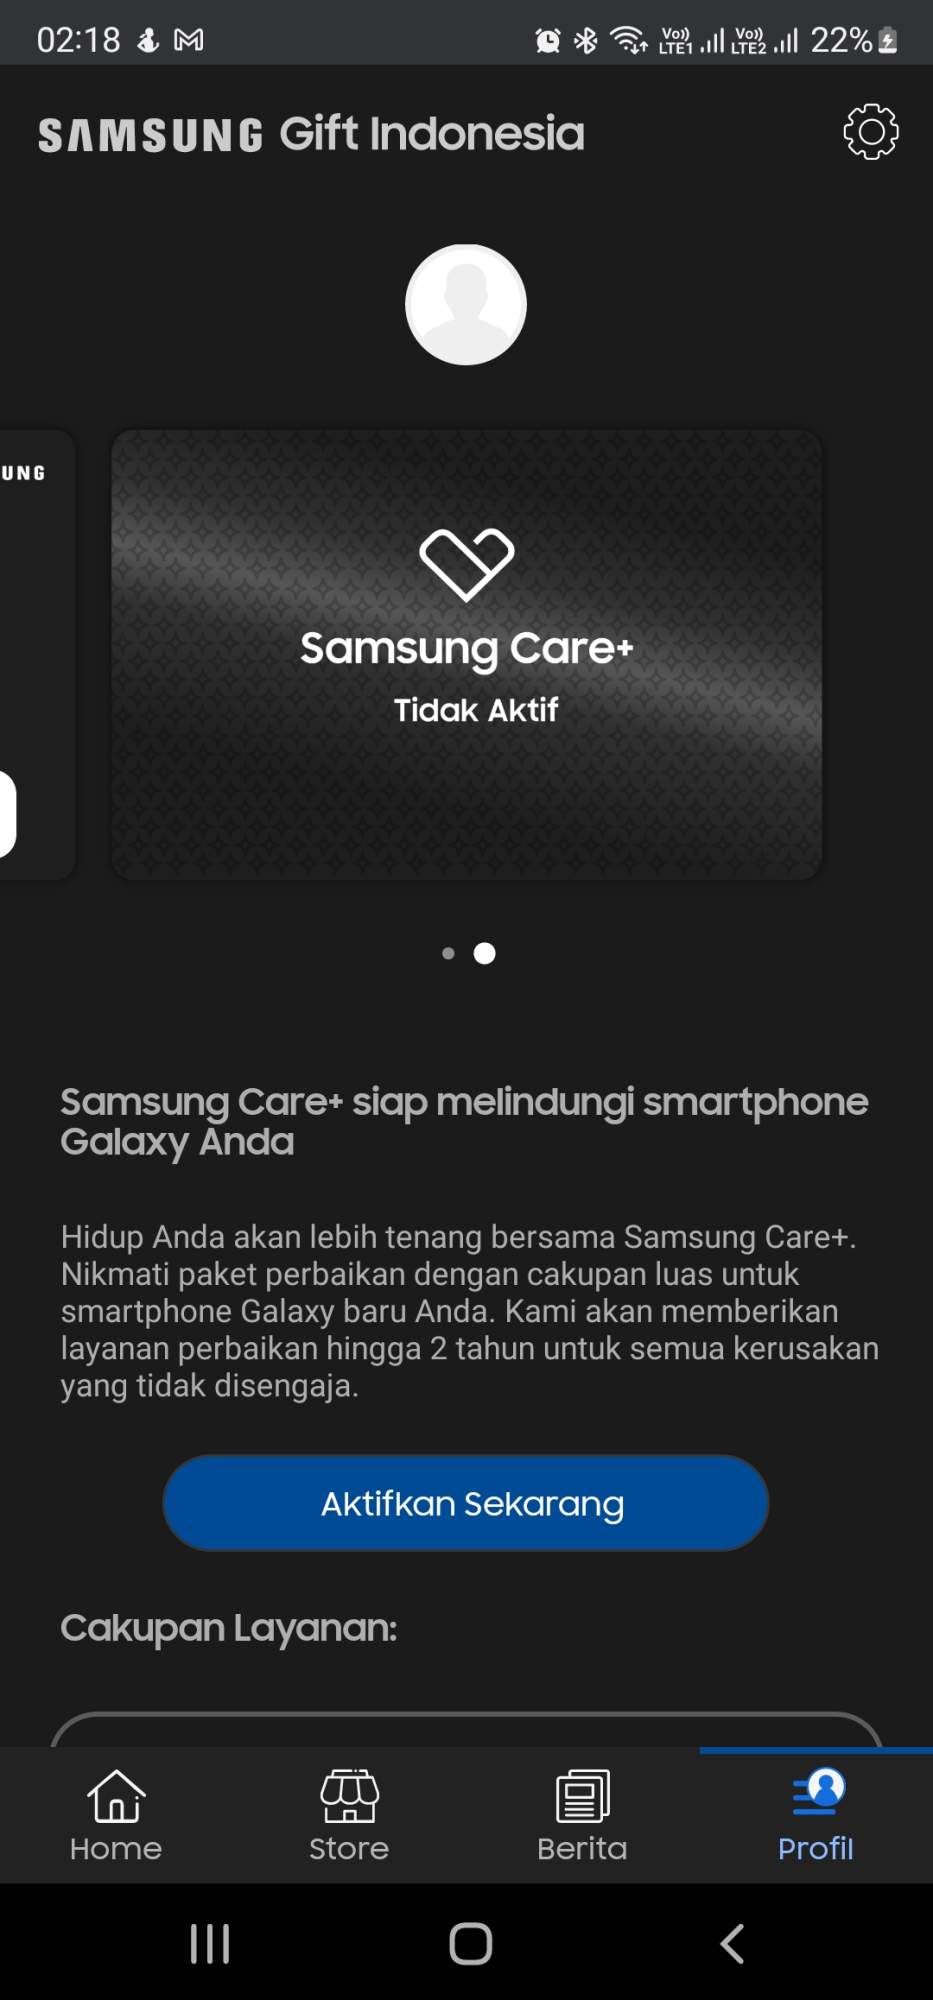 Tampilan Samsung Care+ dalam aplikasi Samsung Gift Indonesia